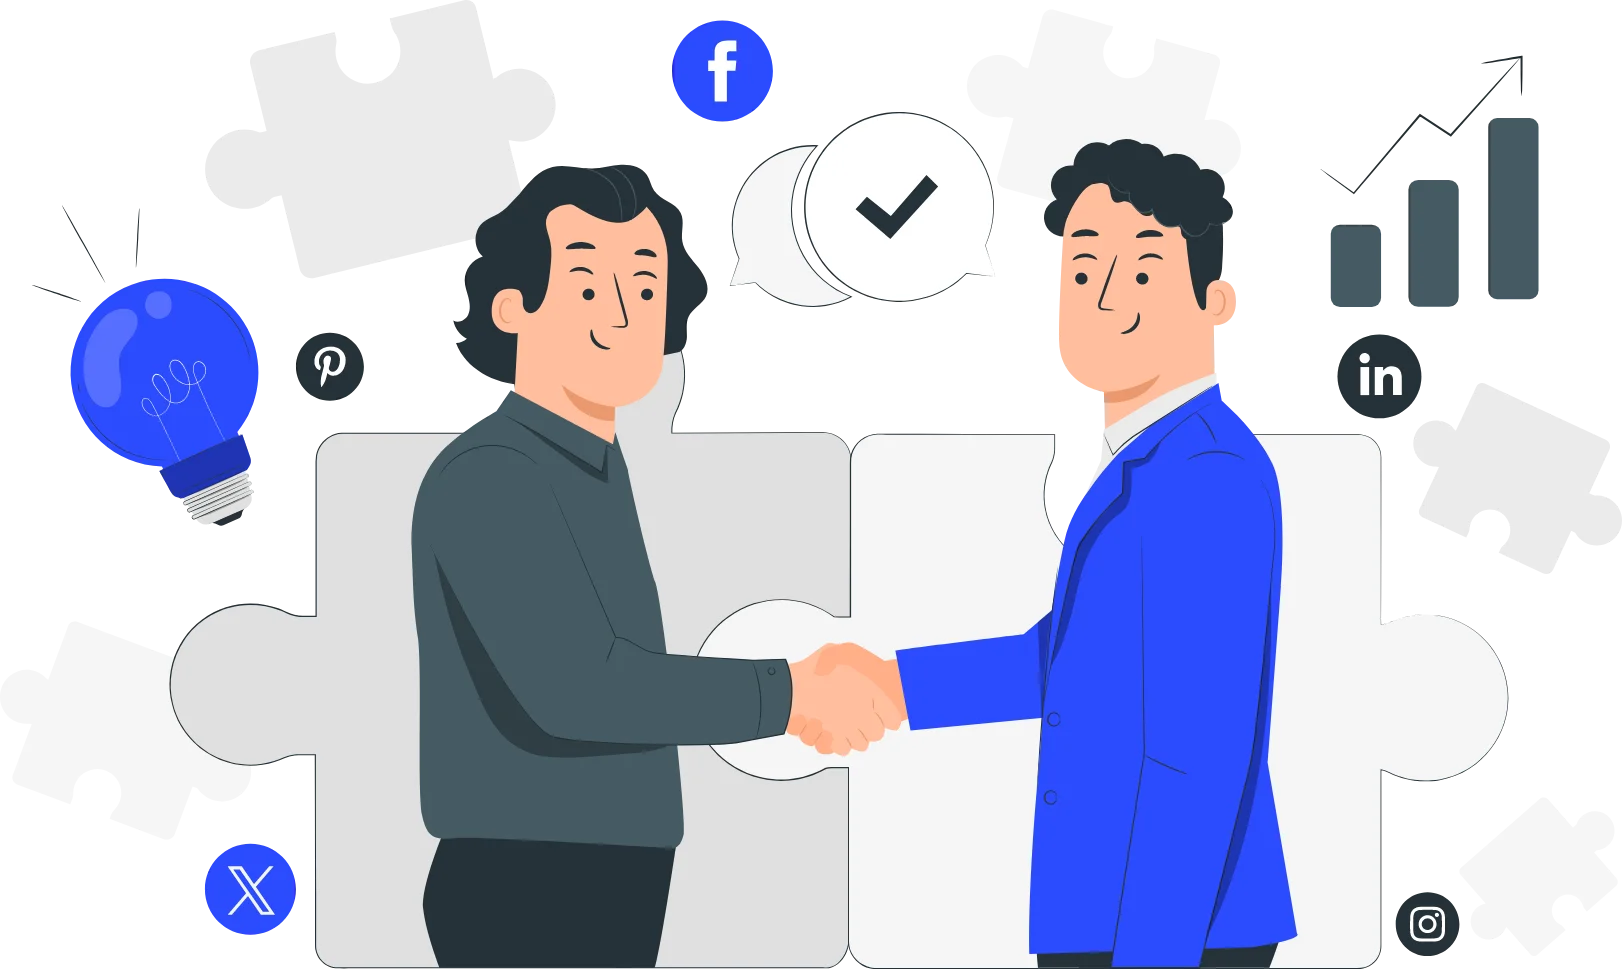 Social Media Collaboration